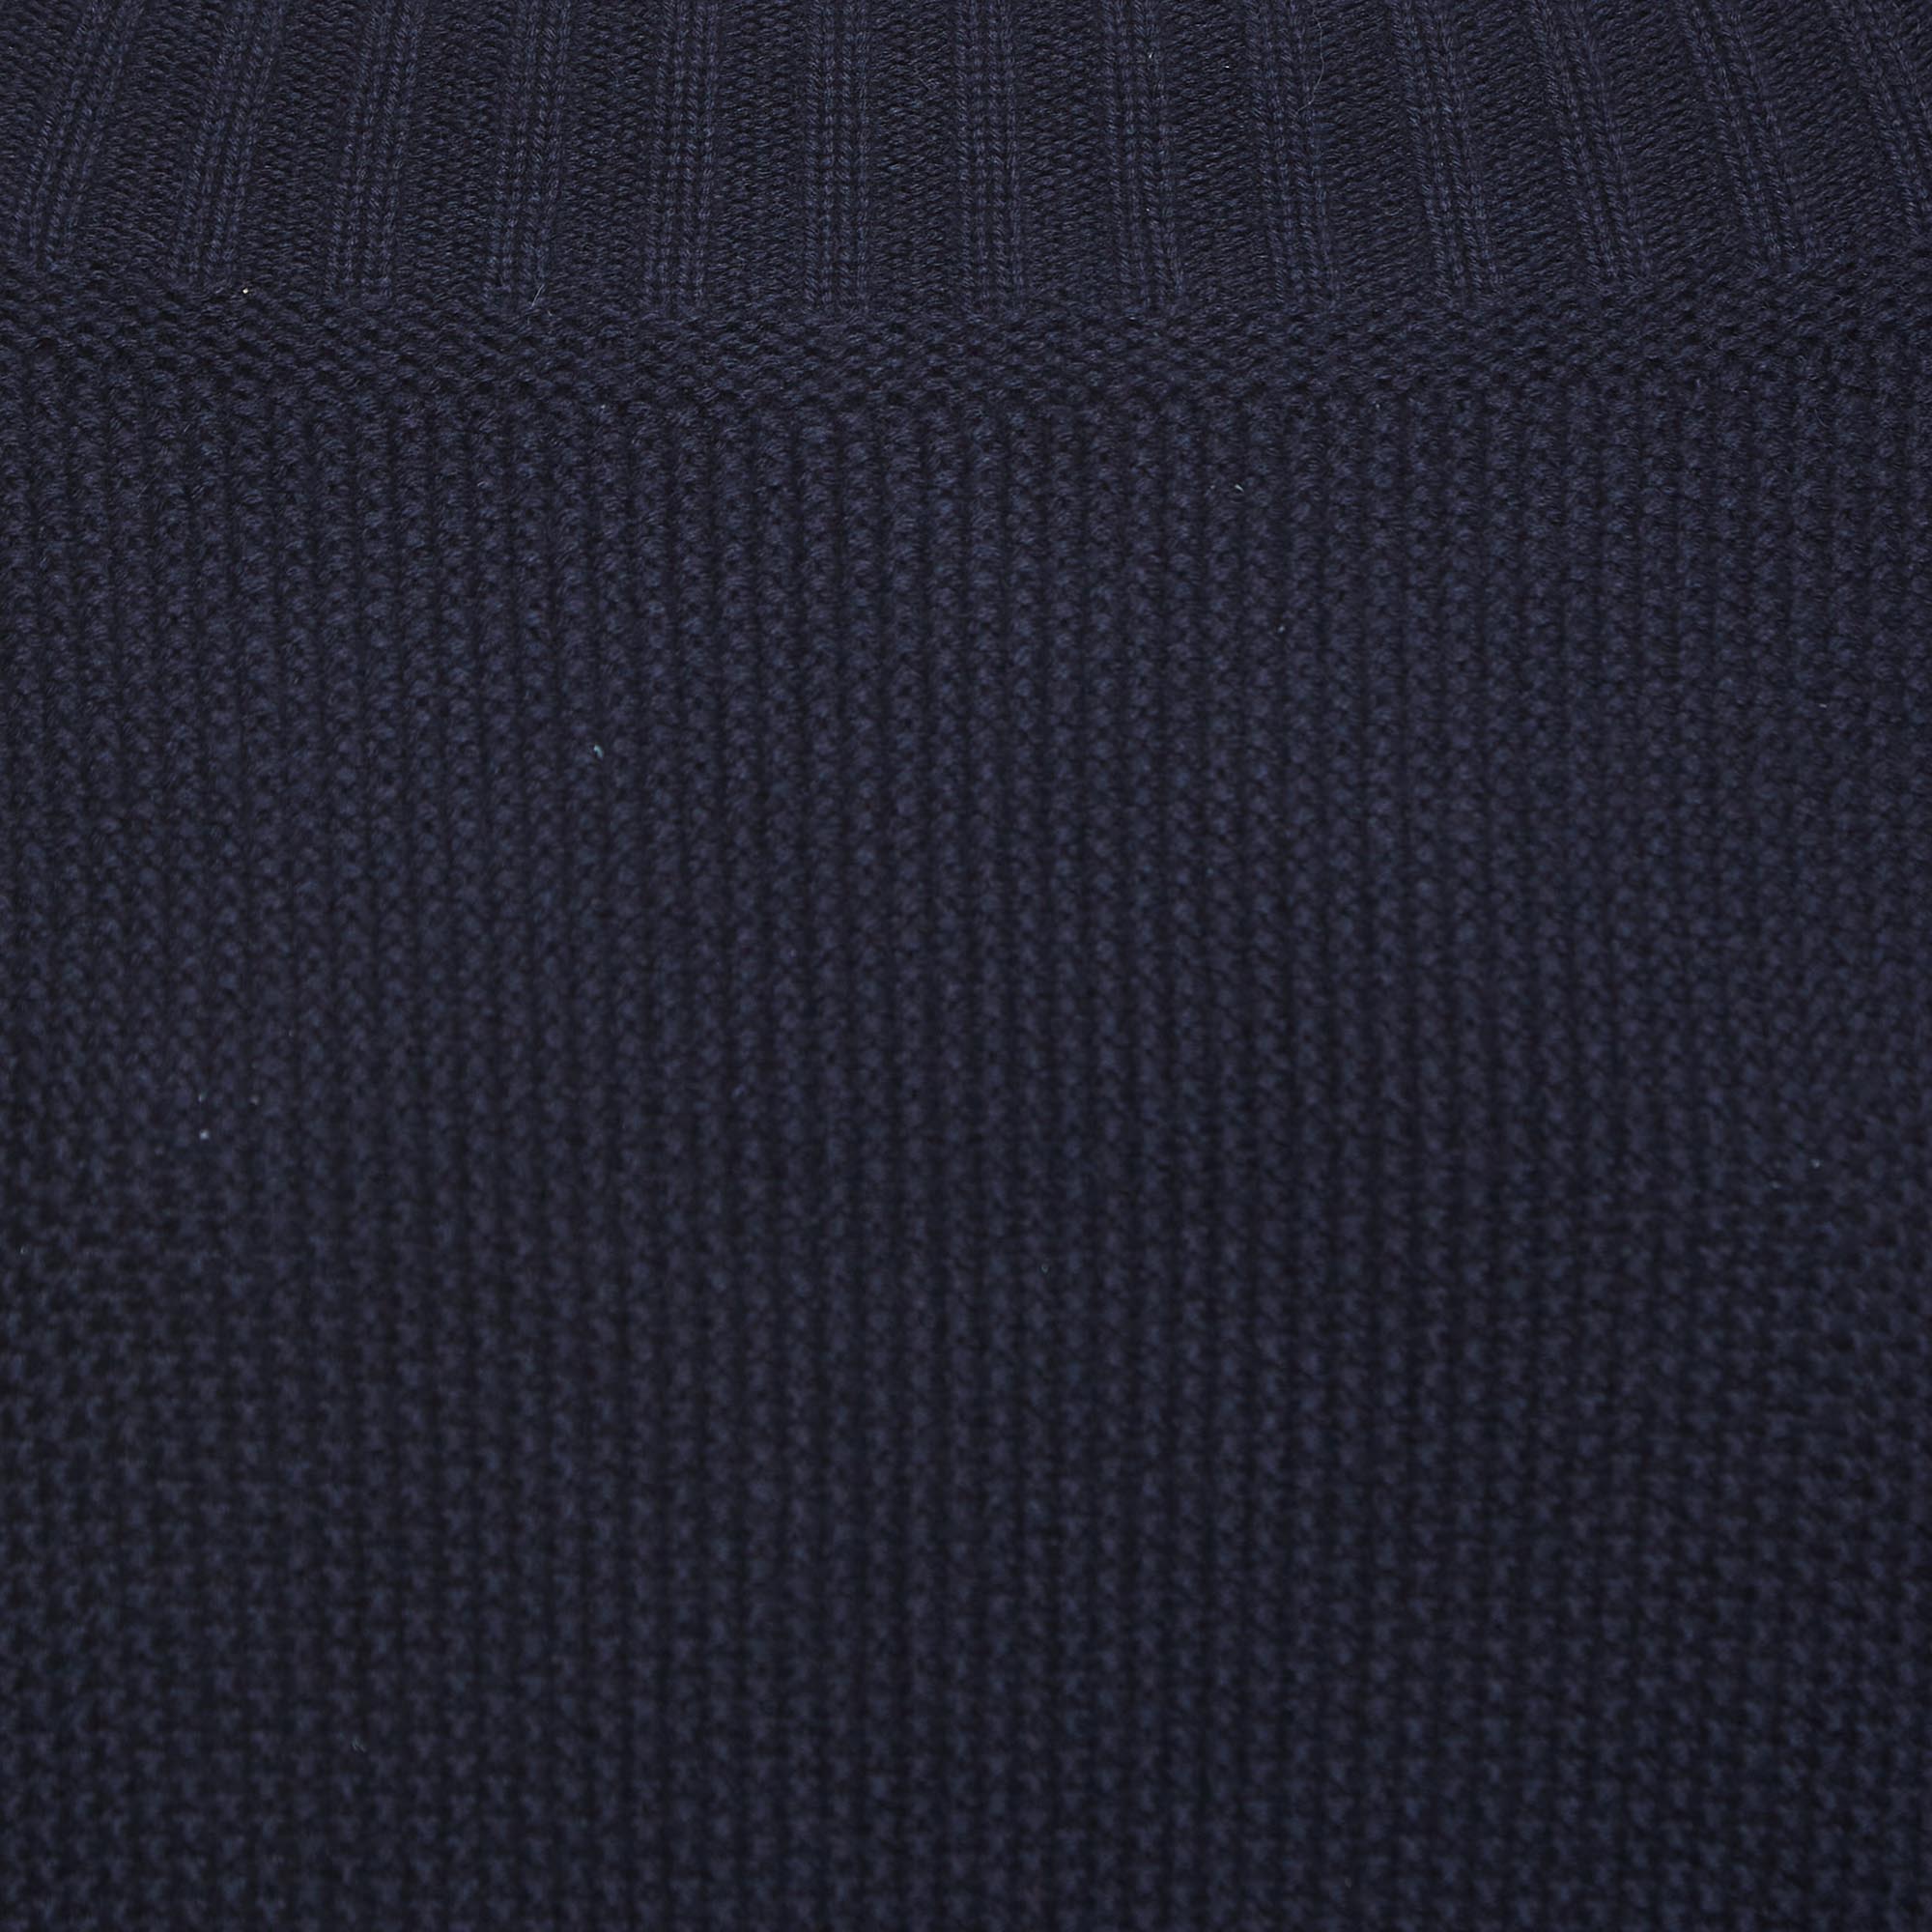 Burberry Prorsum Navy Blue Wool Boat Neck Sweater M